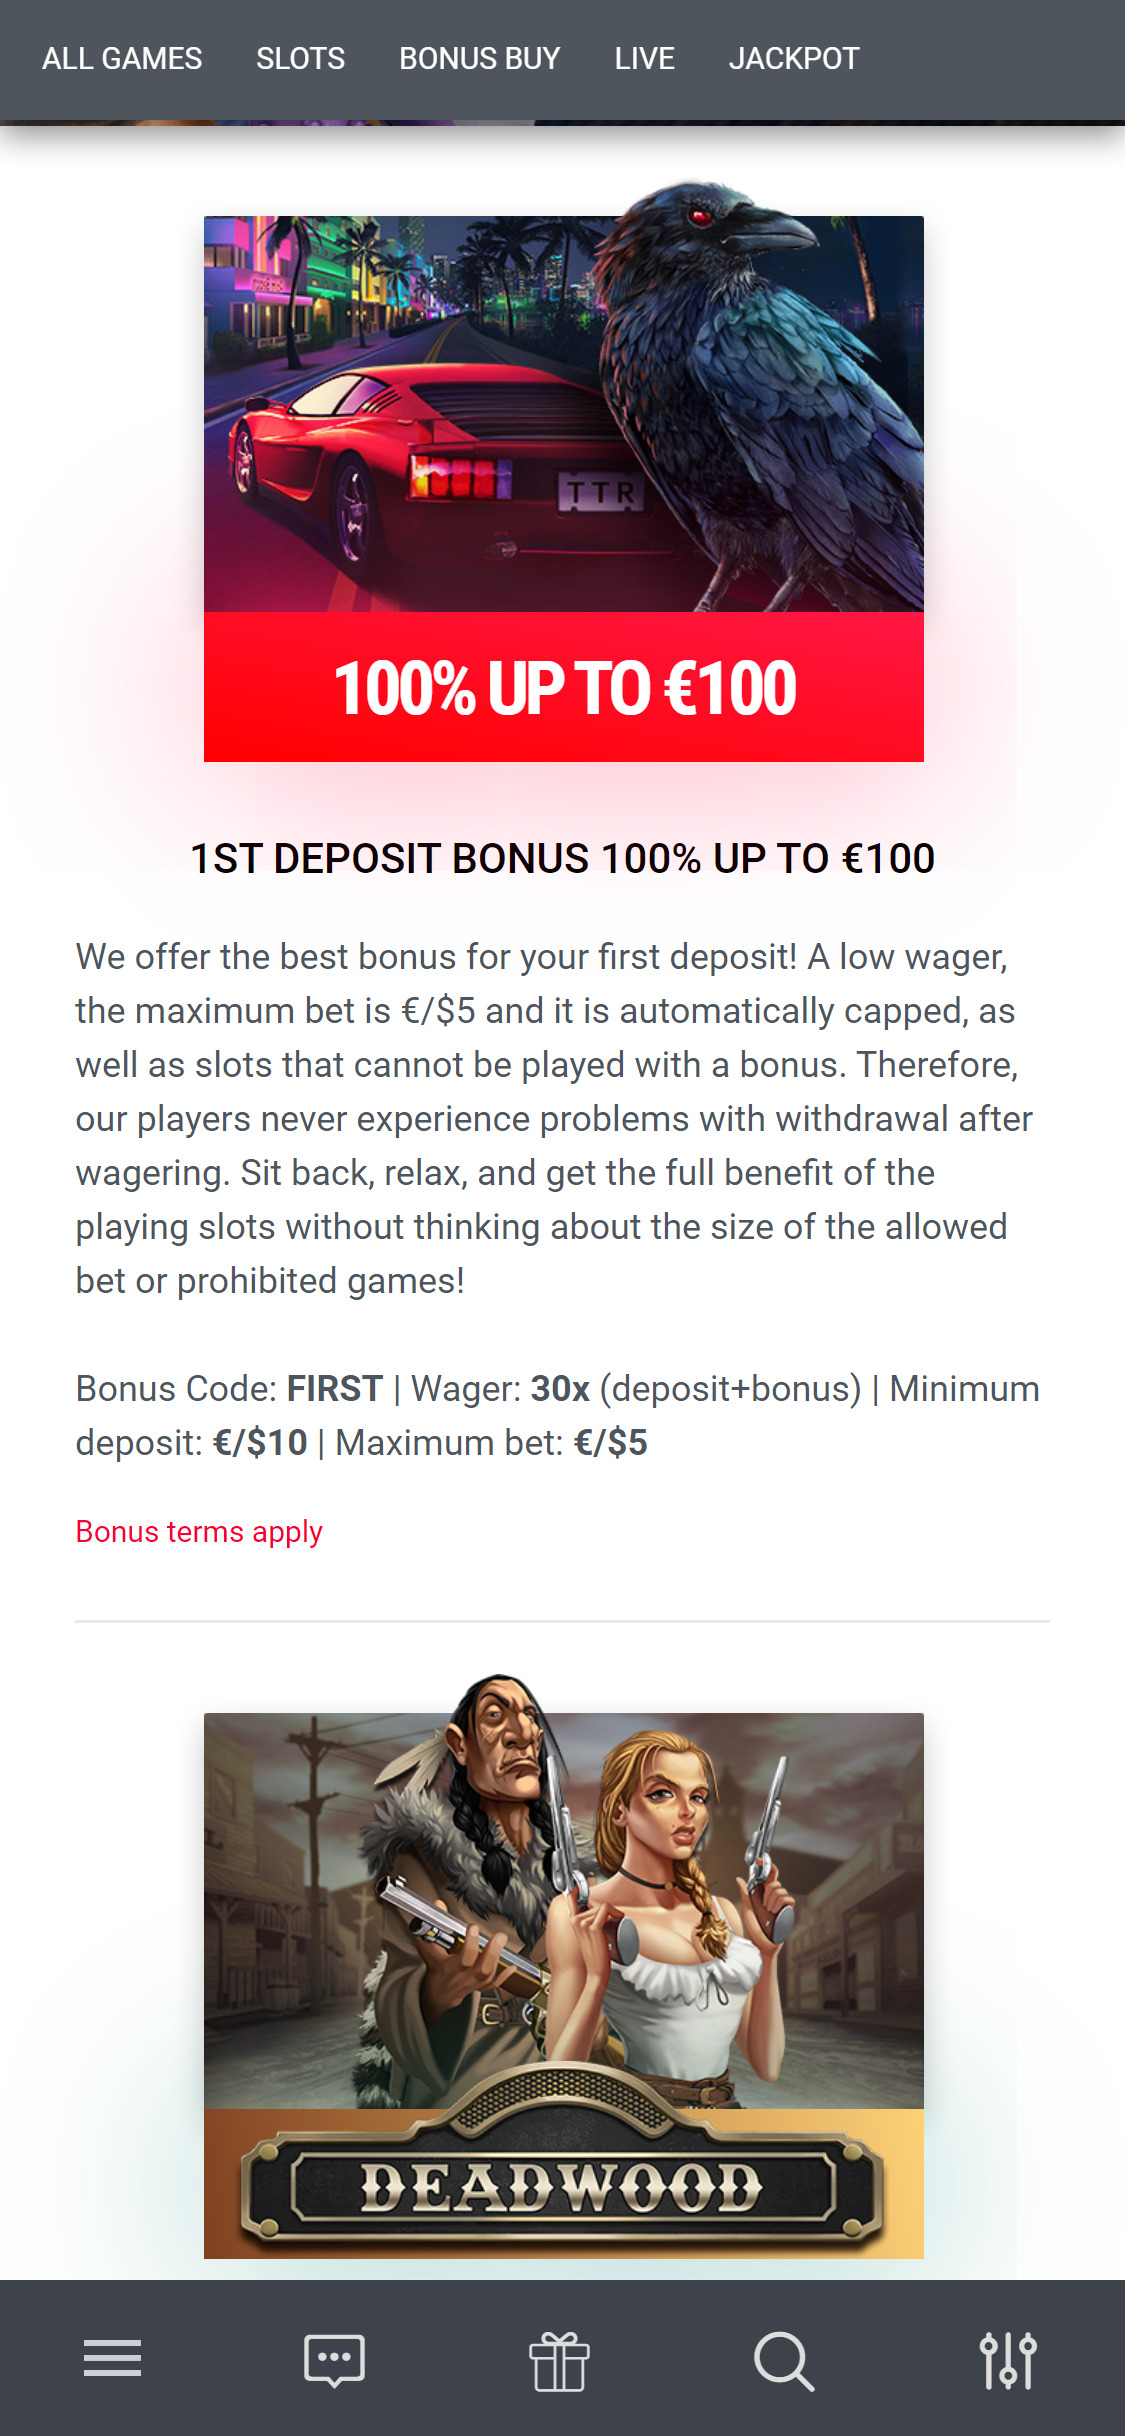 TTR Casino Mobile No Deposit Bonus Review